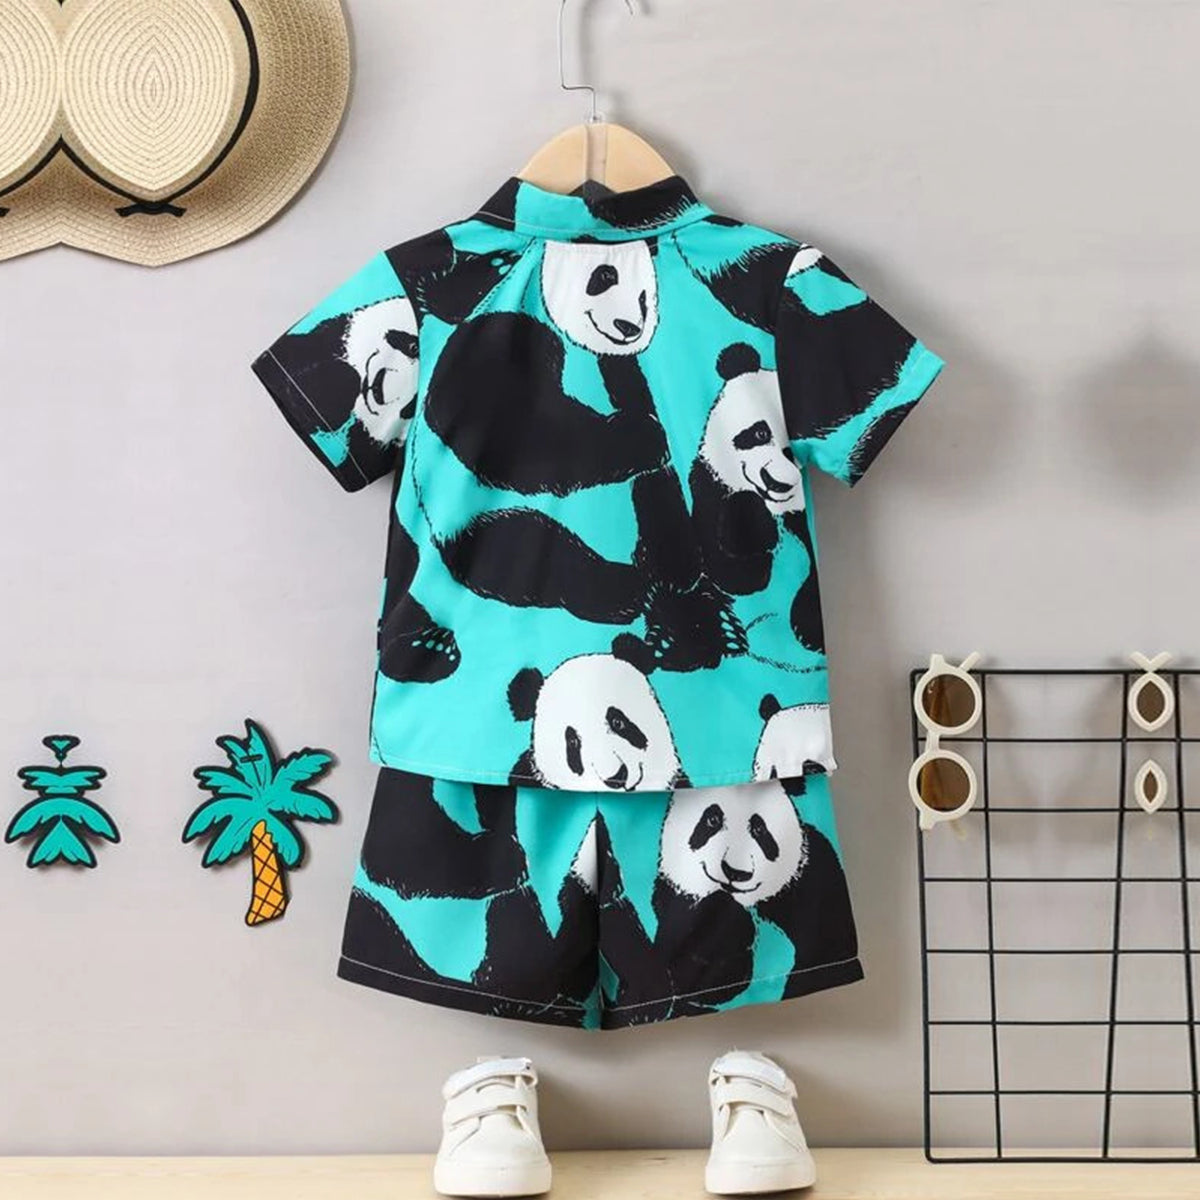 Venutaloza Kids Cartoon Panda Print Turn Down Collar Shirt & Shorts Without tee Two Piece Set.